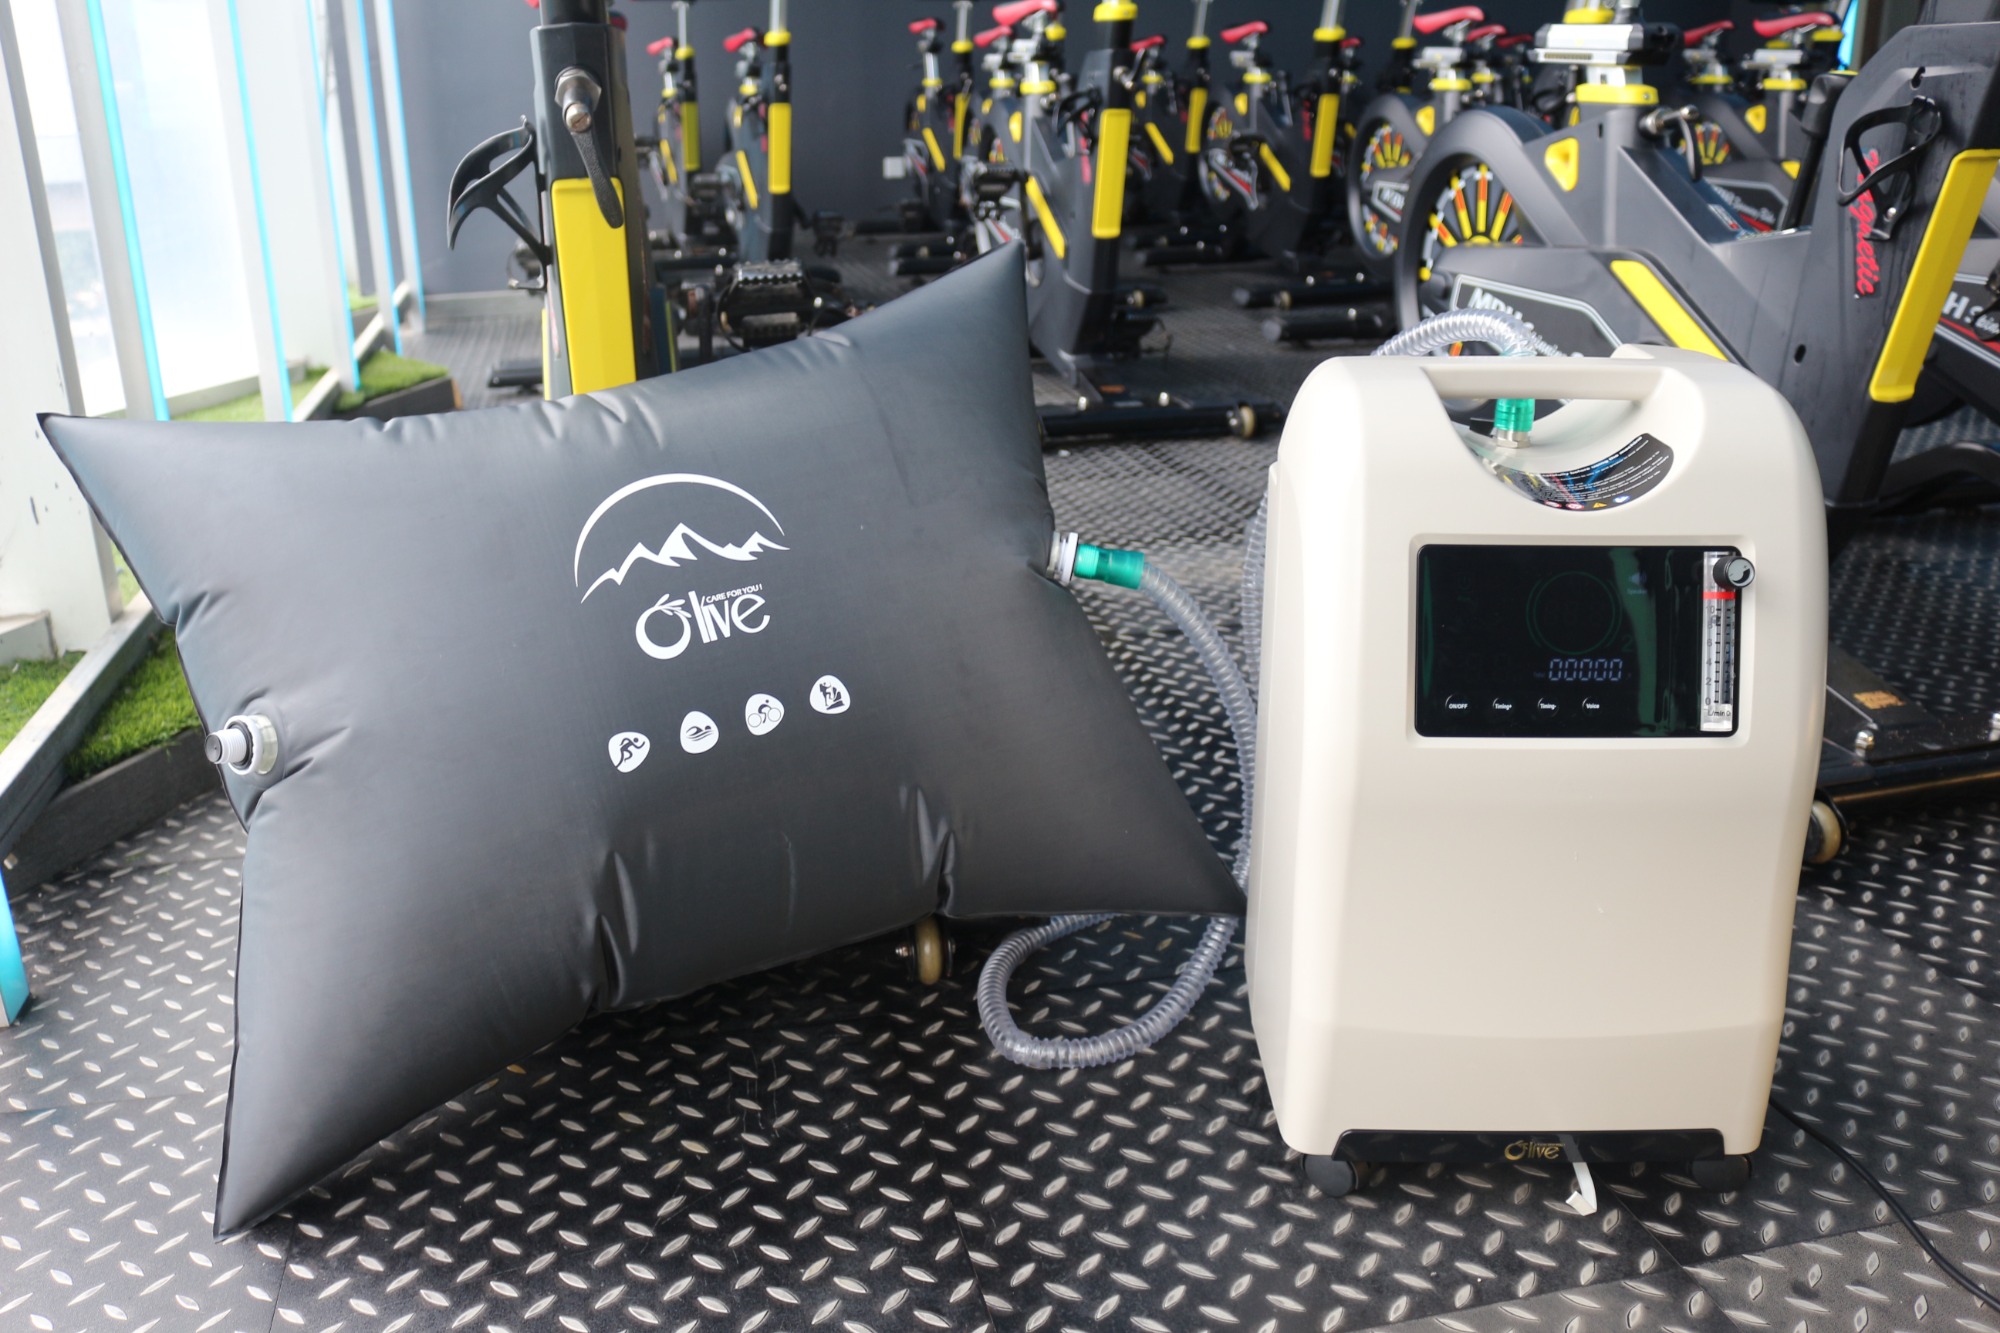 100l Hypoxic Generator For 4000 Meters Simulated Altitude Training Machine